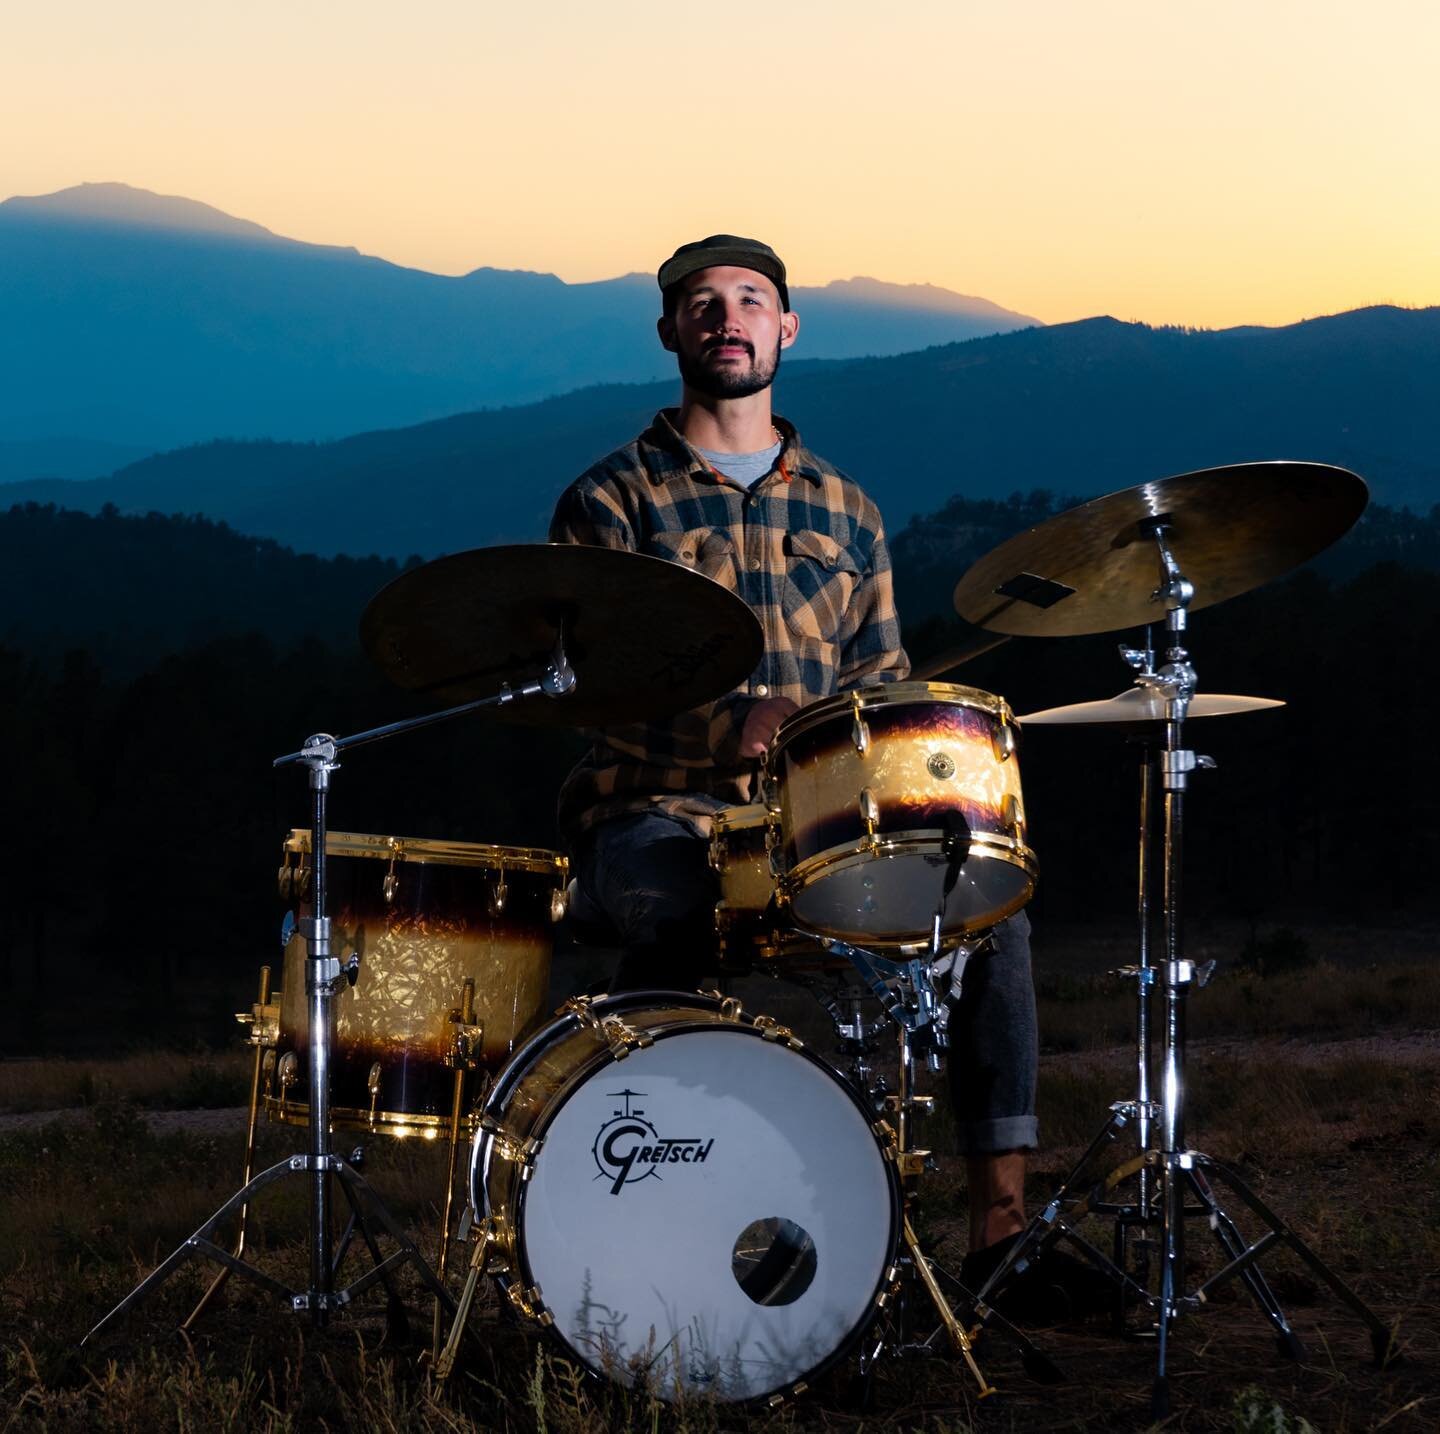 Socially distanced drum services coming soon... 

📸: @thrillysoul 

.

.

.

.

.

#Gretsch #GretschDrums #EspressoBurst #MaxwellDrums #Zildjian #ZildjianCymbals #Instadrums #Drums #Drummer #Colorado #LoopKitsComingSoon